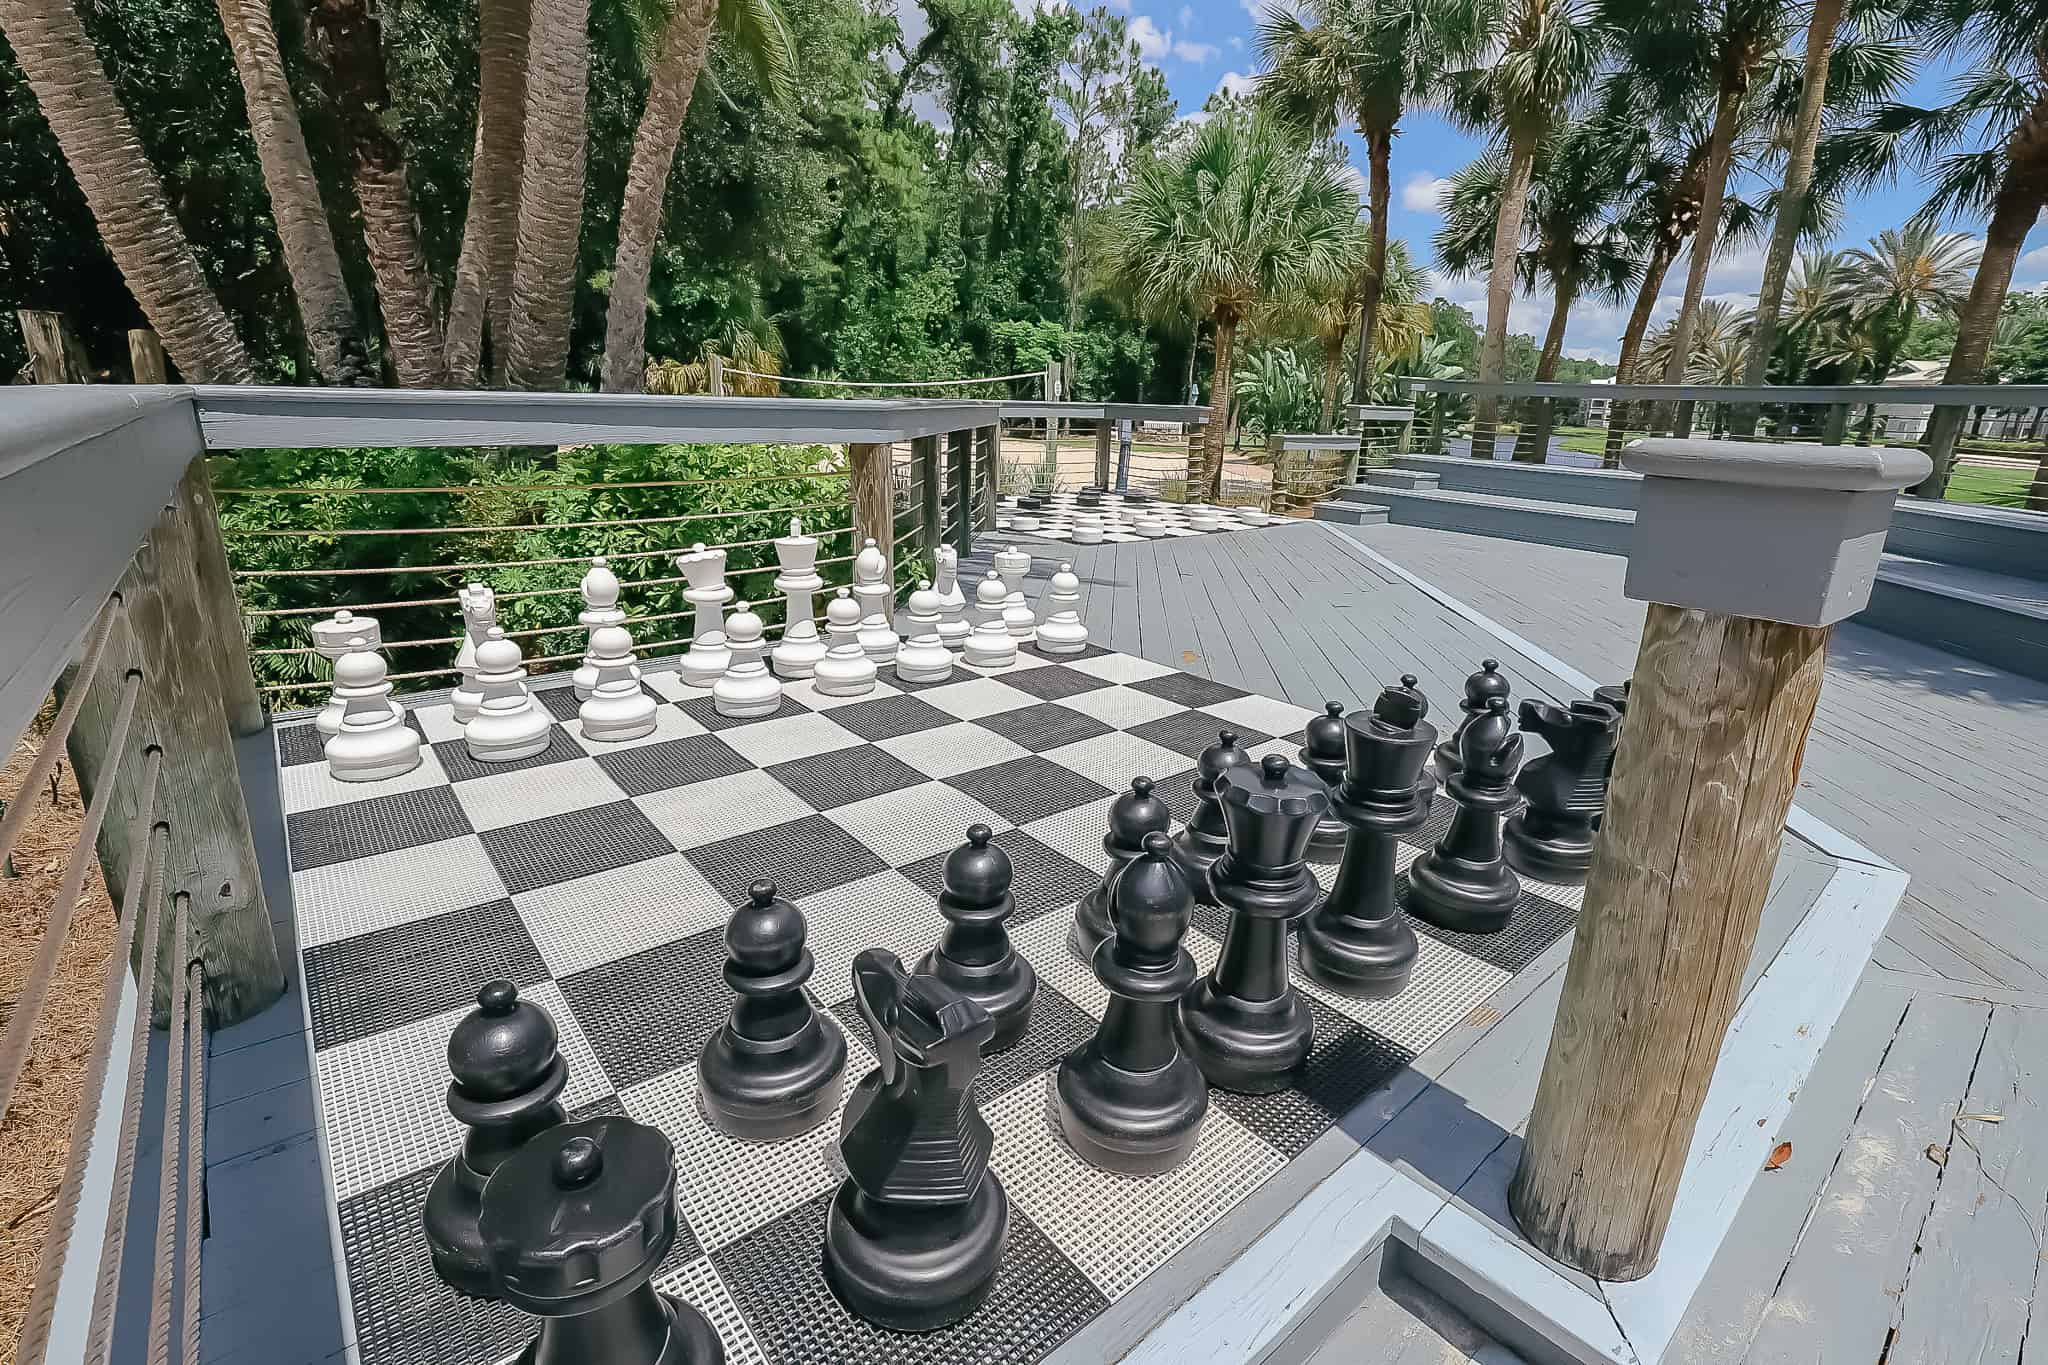 life-size chess set 